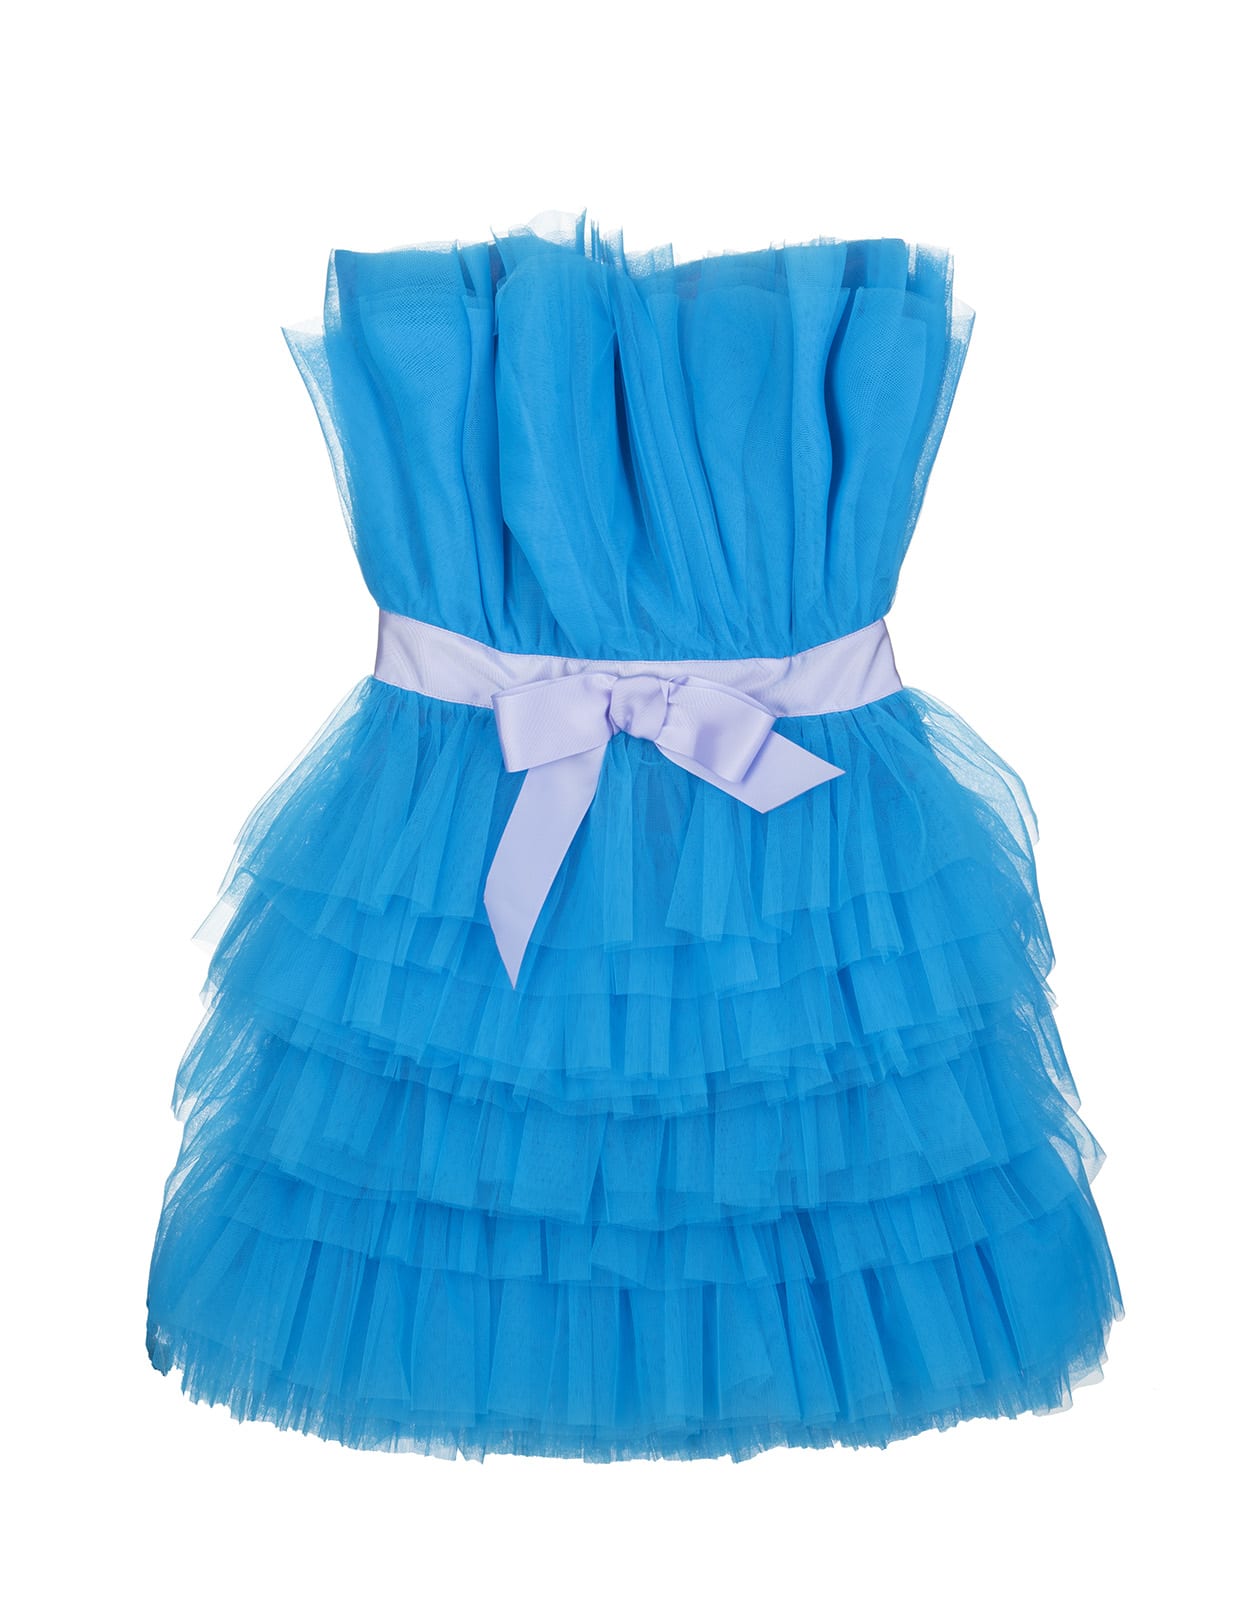 Teen Idol Turquoise Mimosa Dress